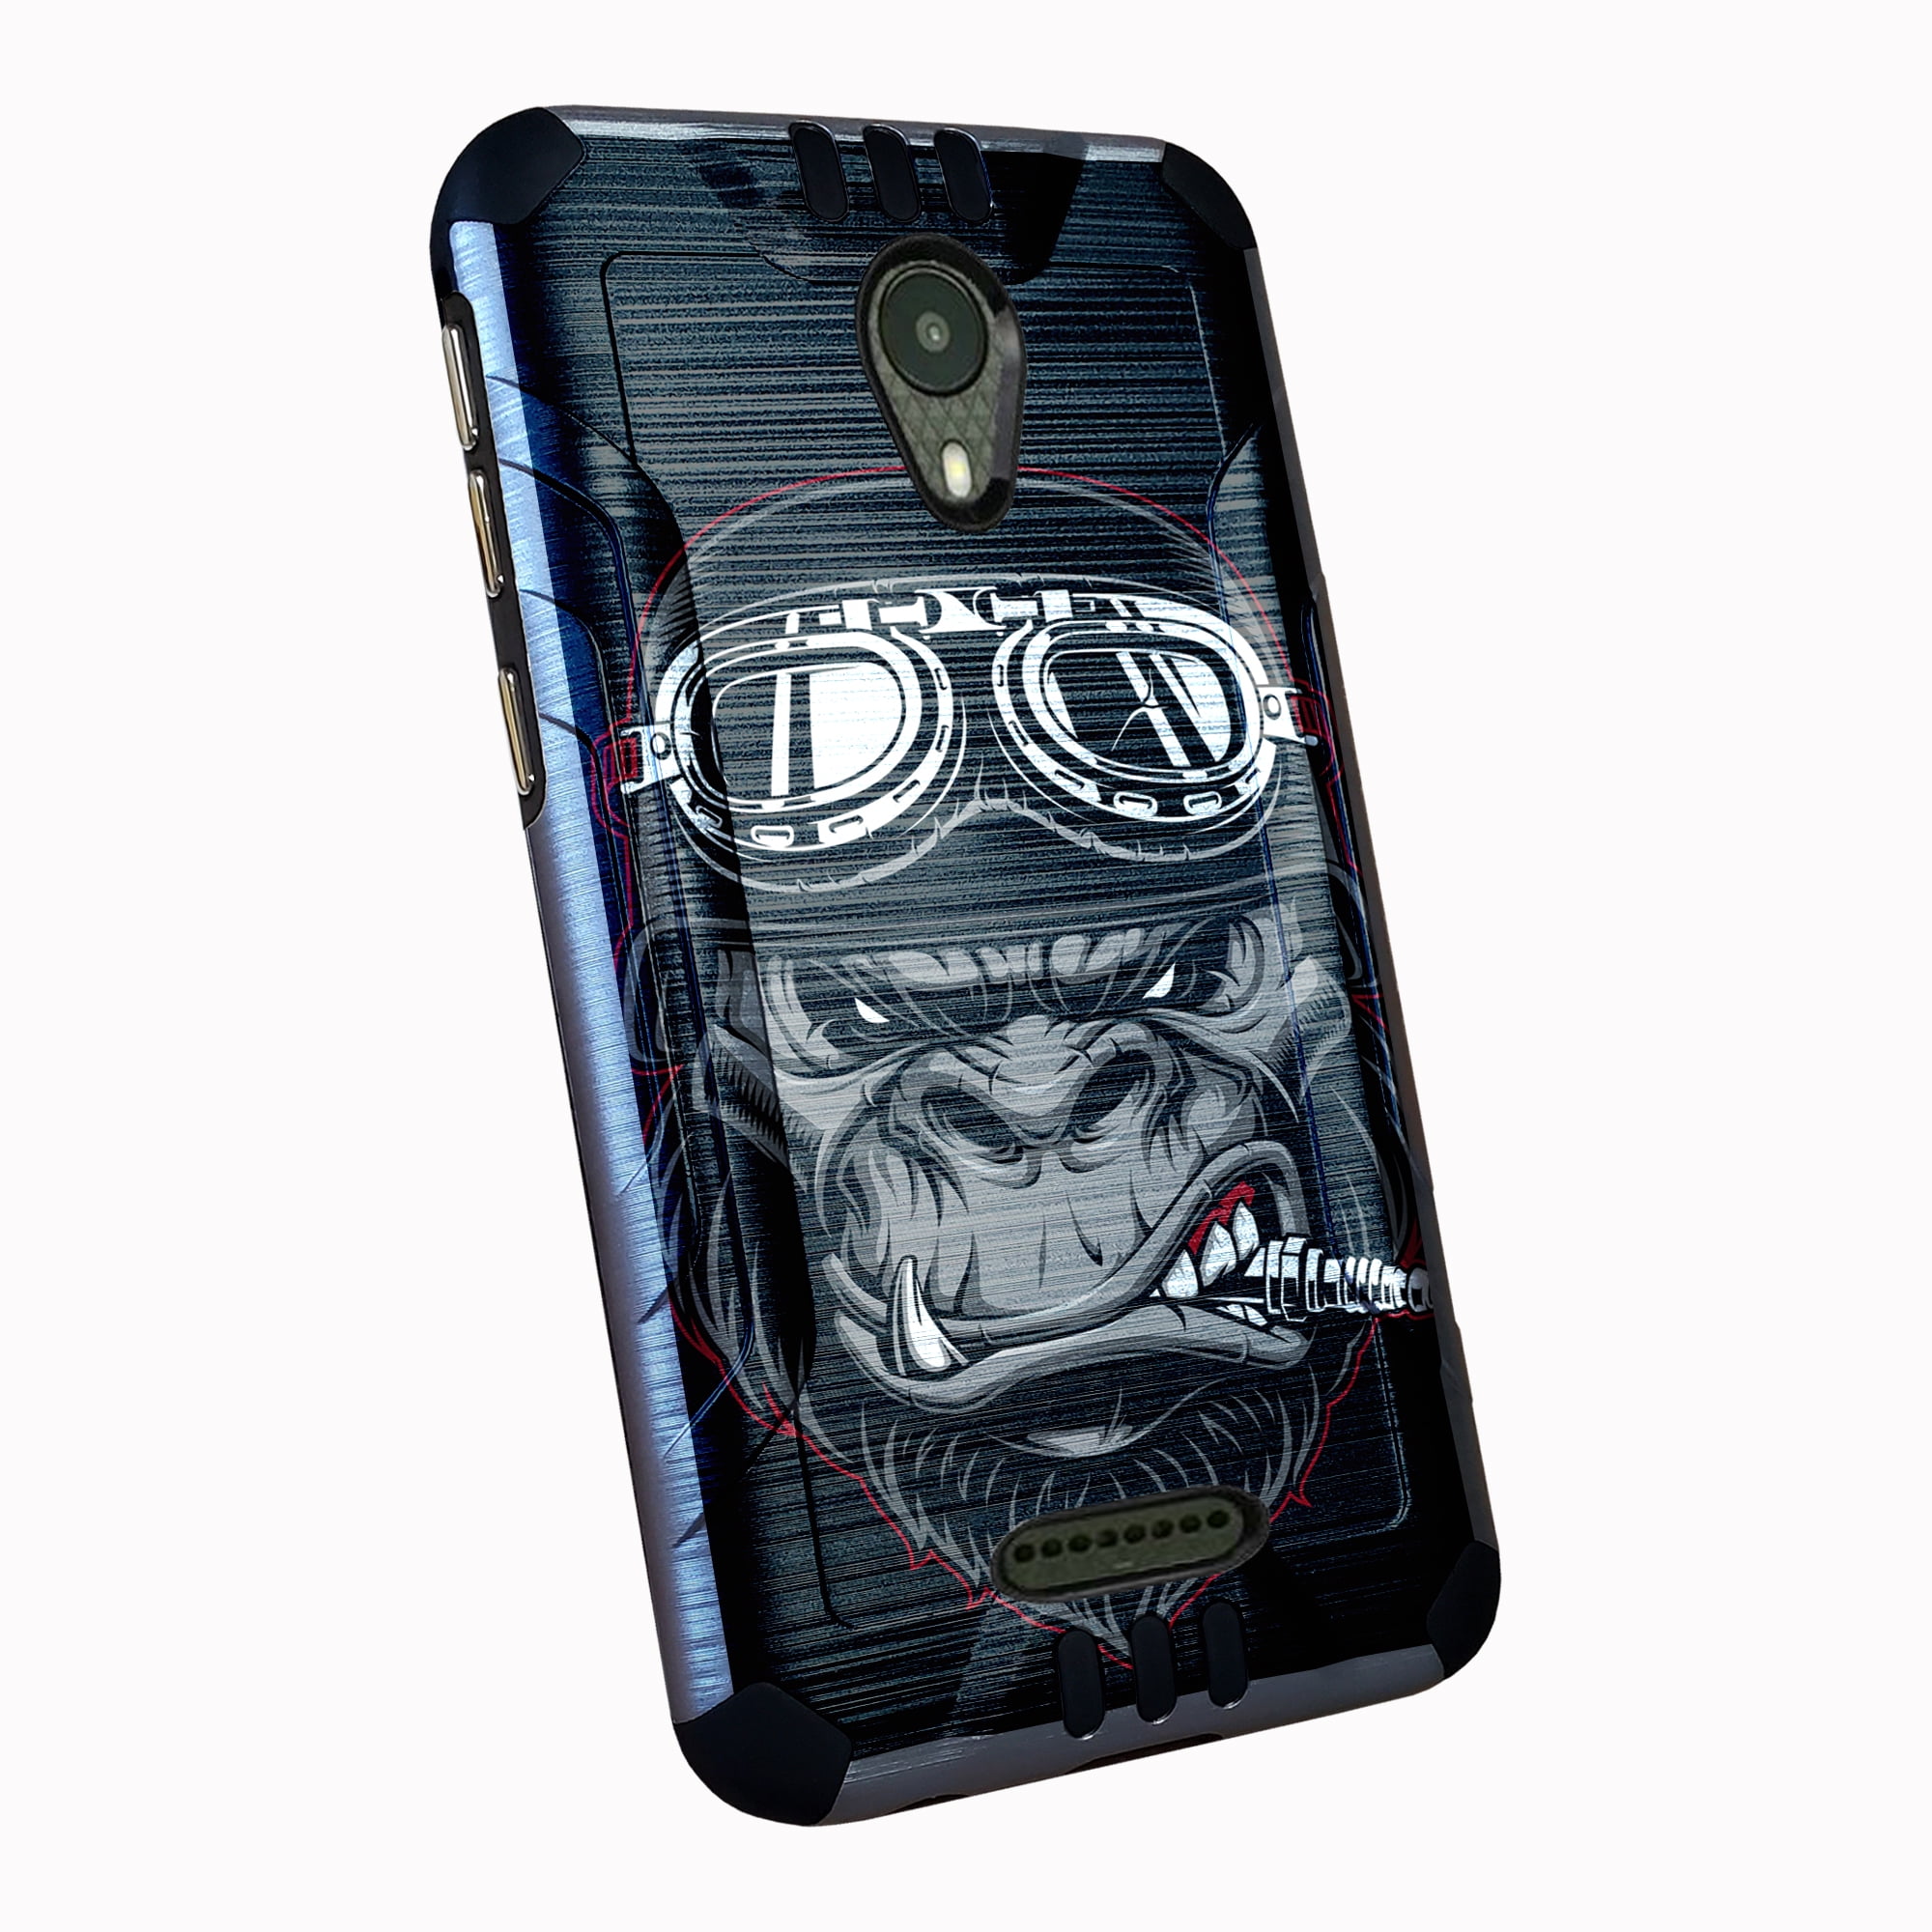 DALUX Combat Phone Case Compatible with Alcatel Insight / TCL A1 A501DL - Gorilla Biker